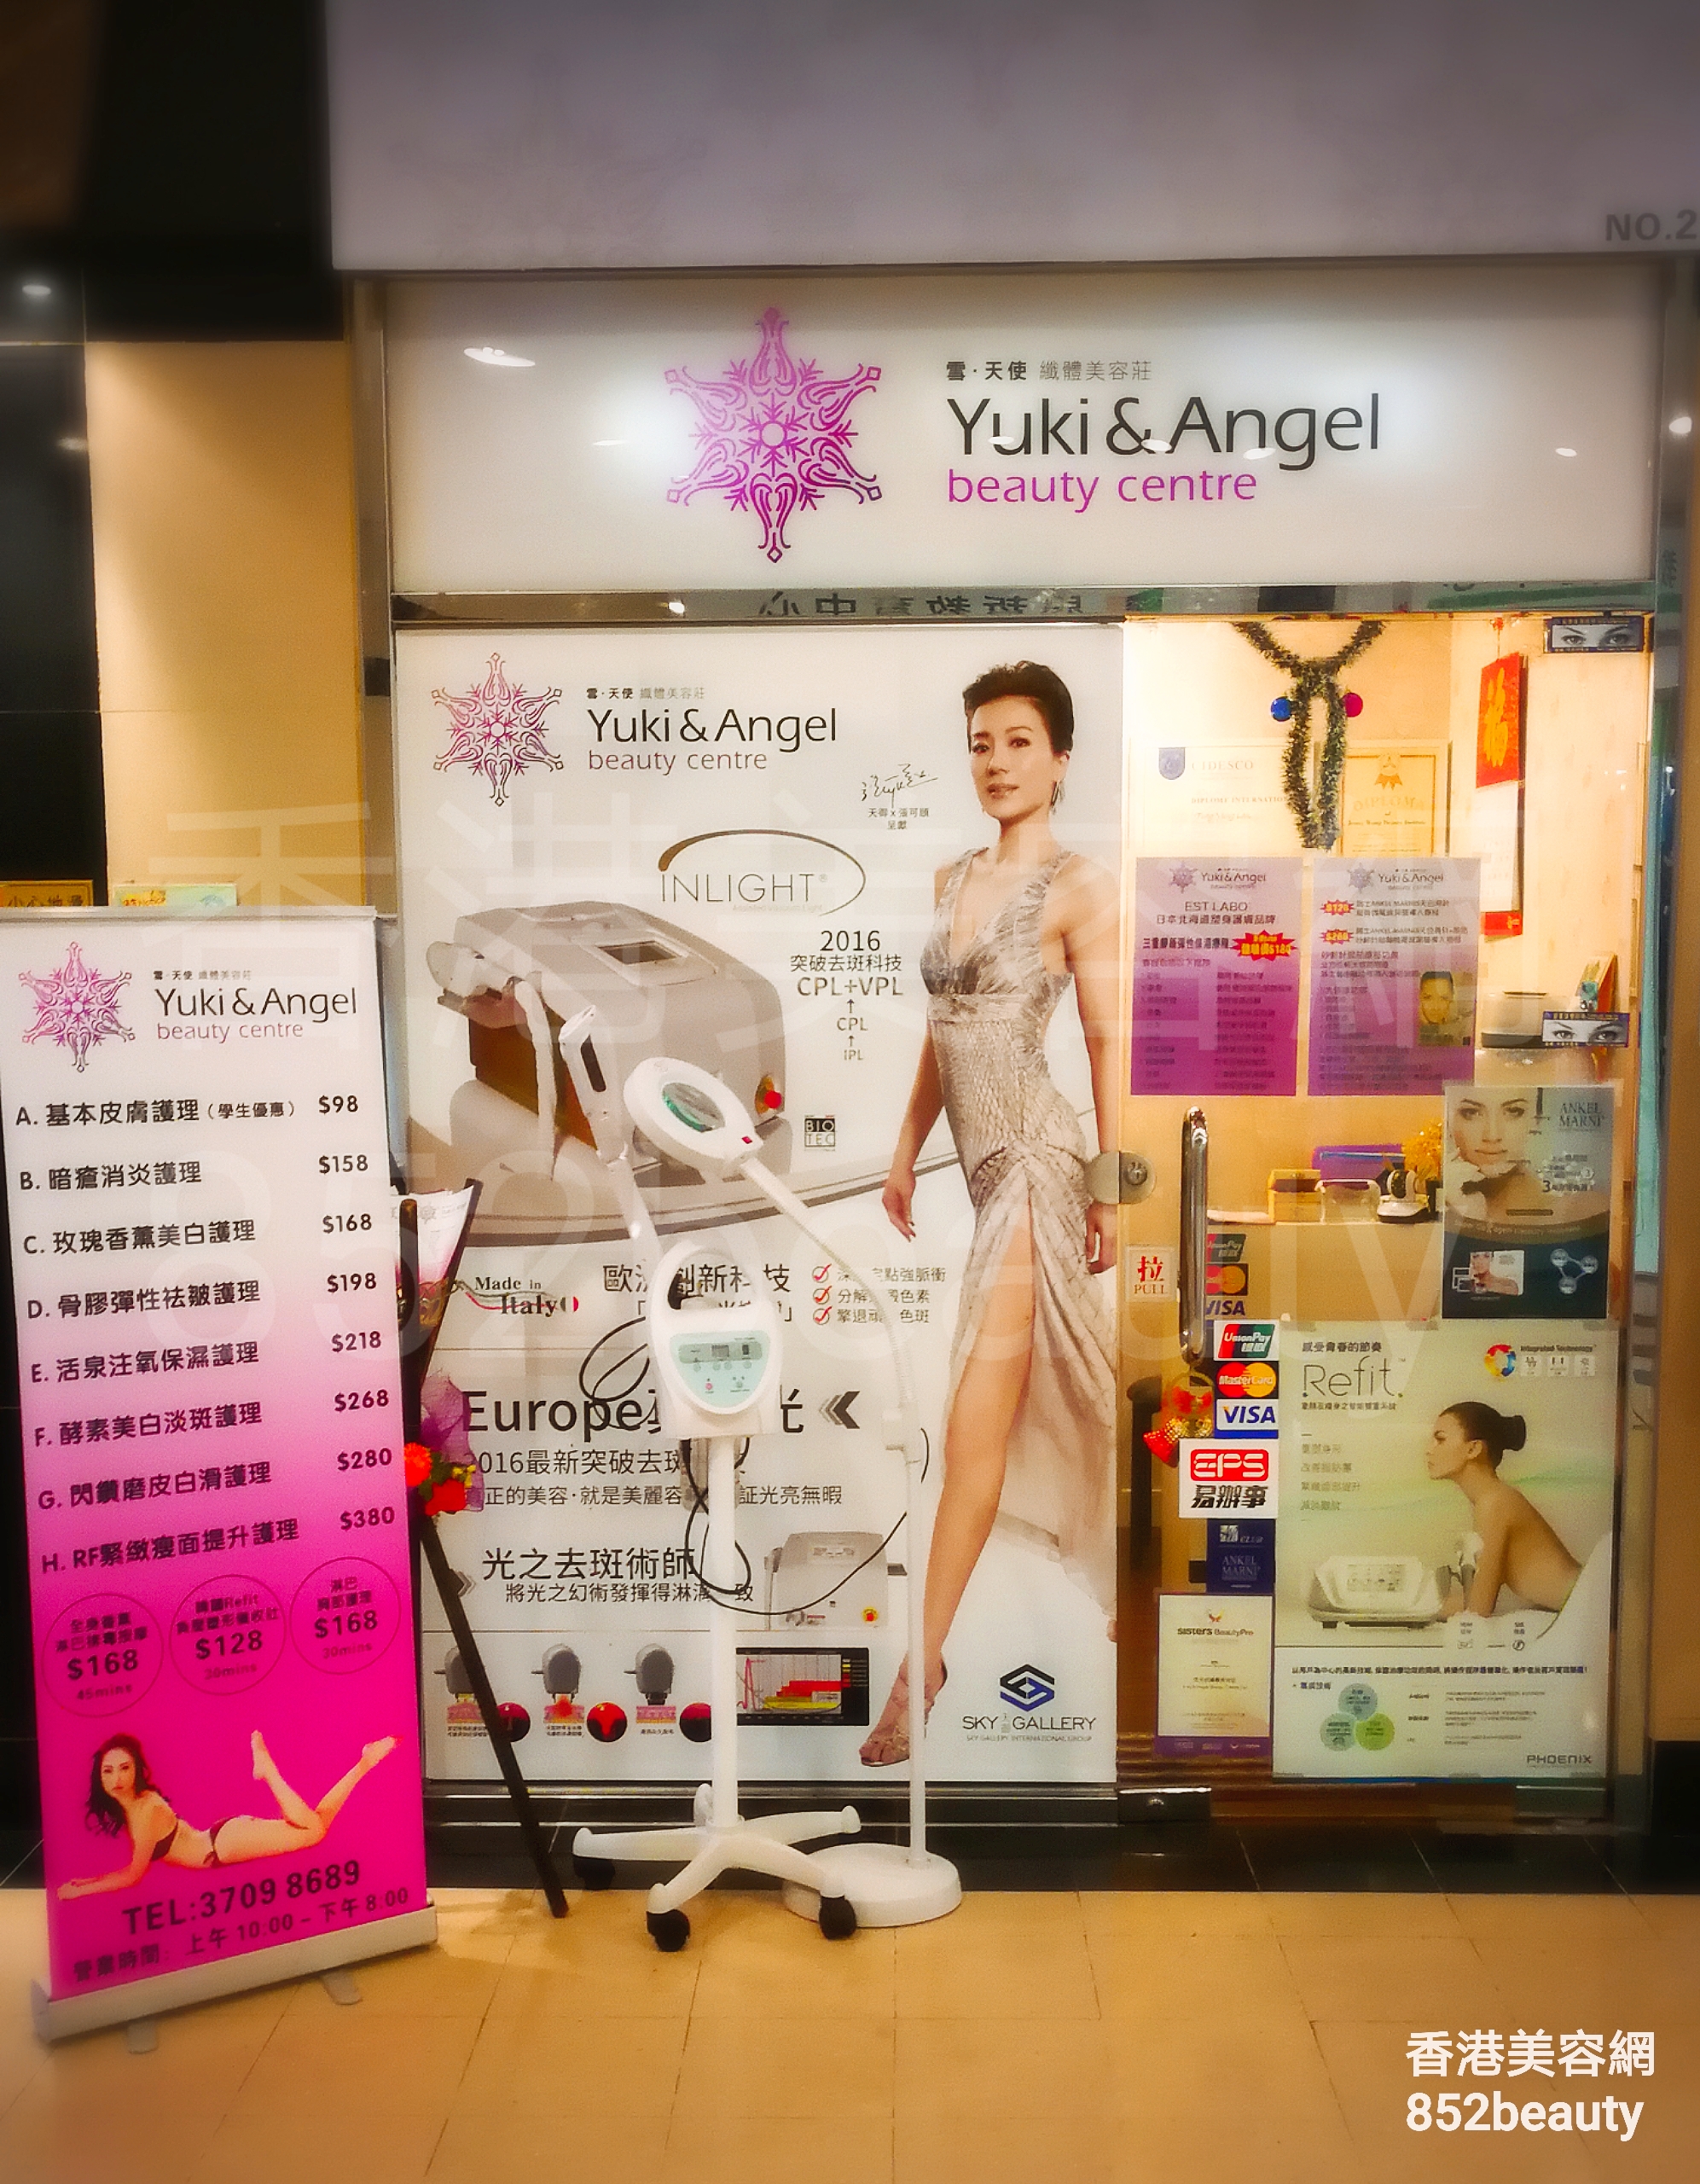 Slimming: Yuki & Angel beauty centre